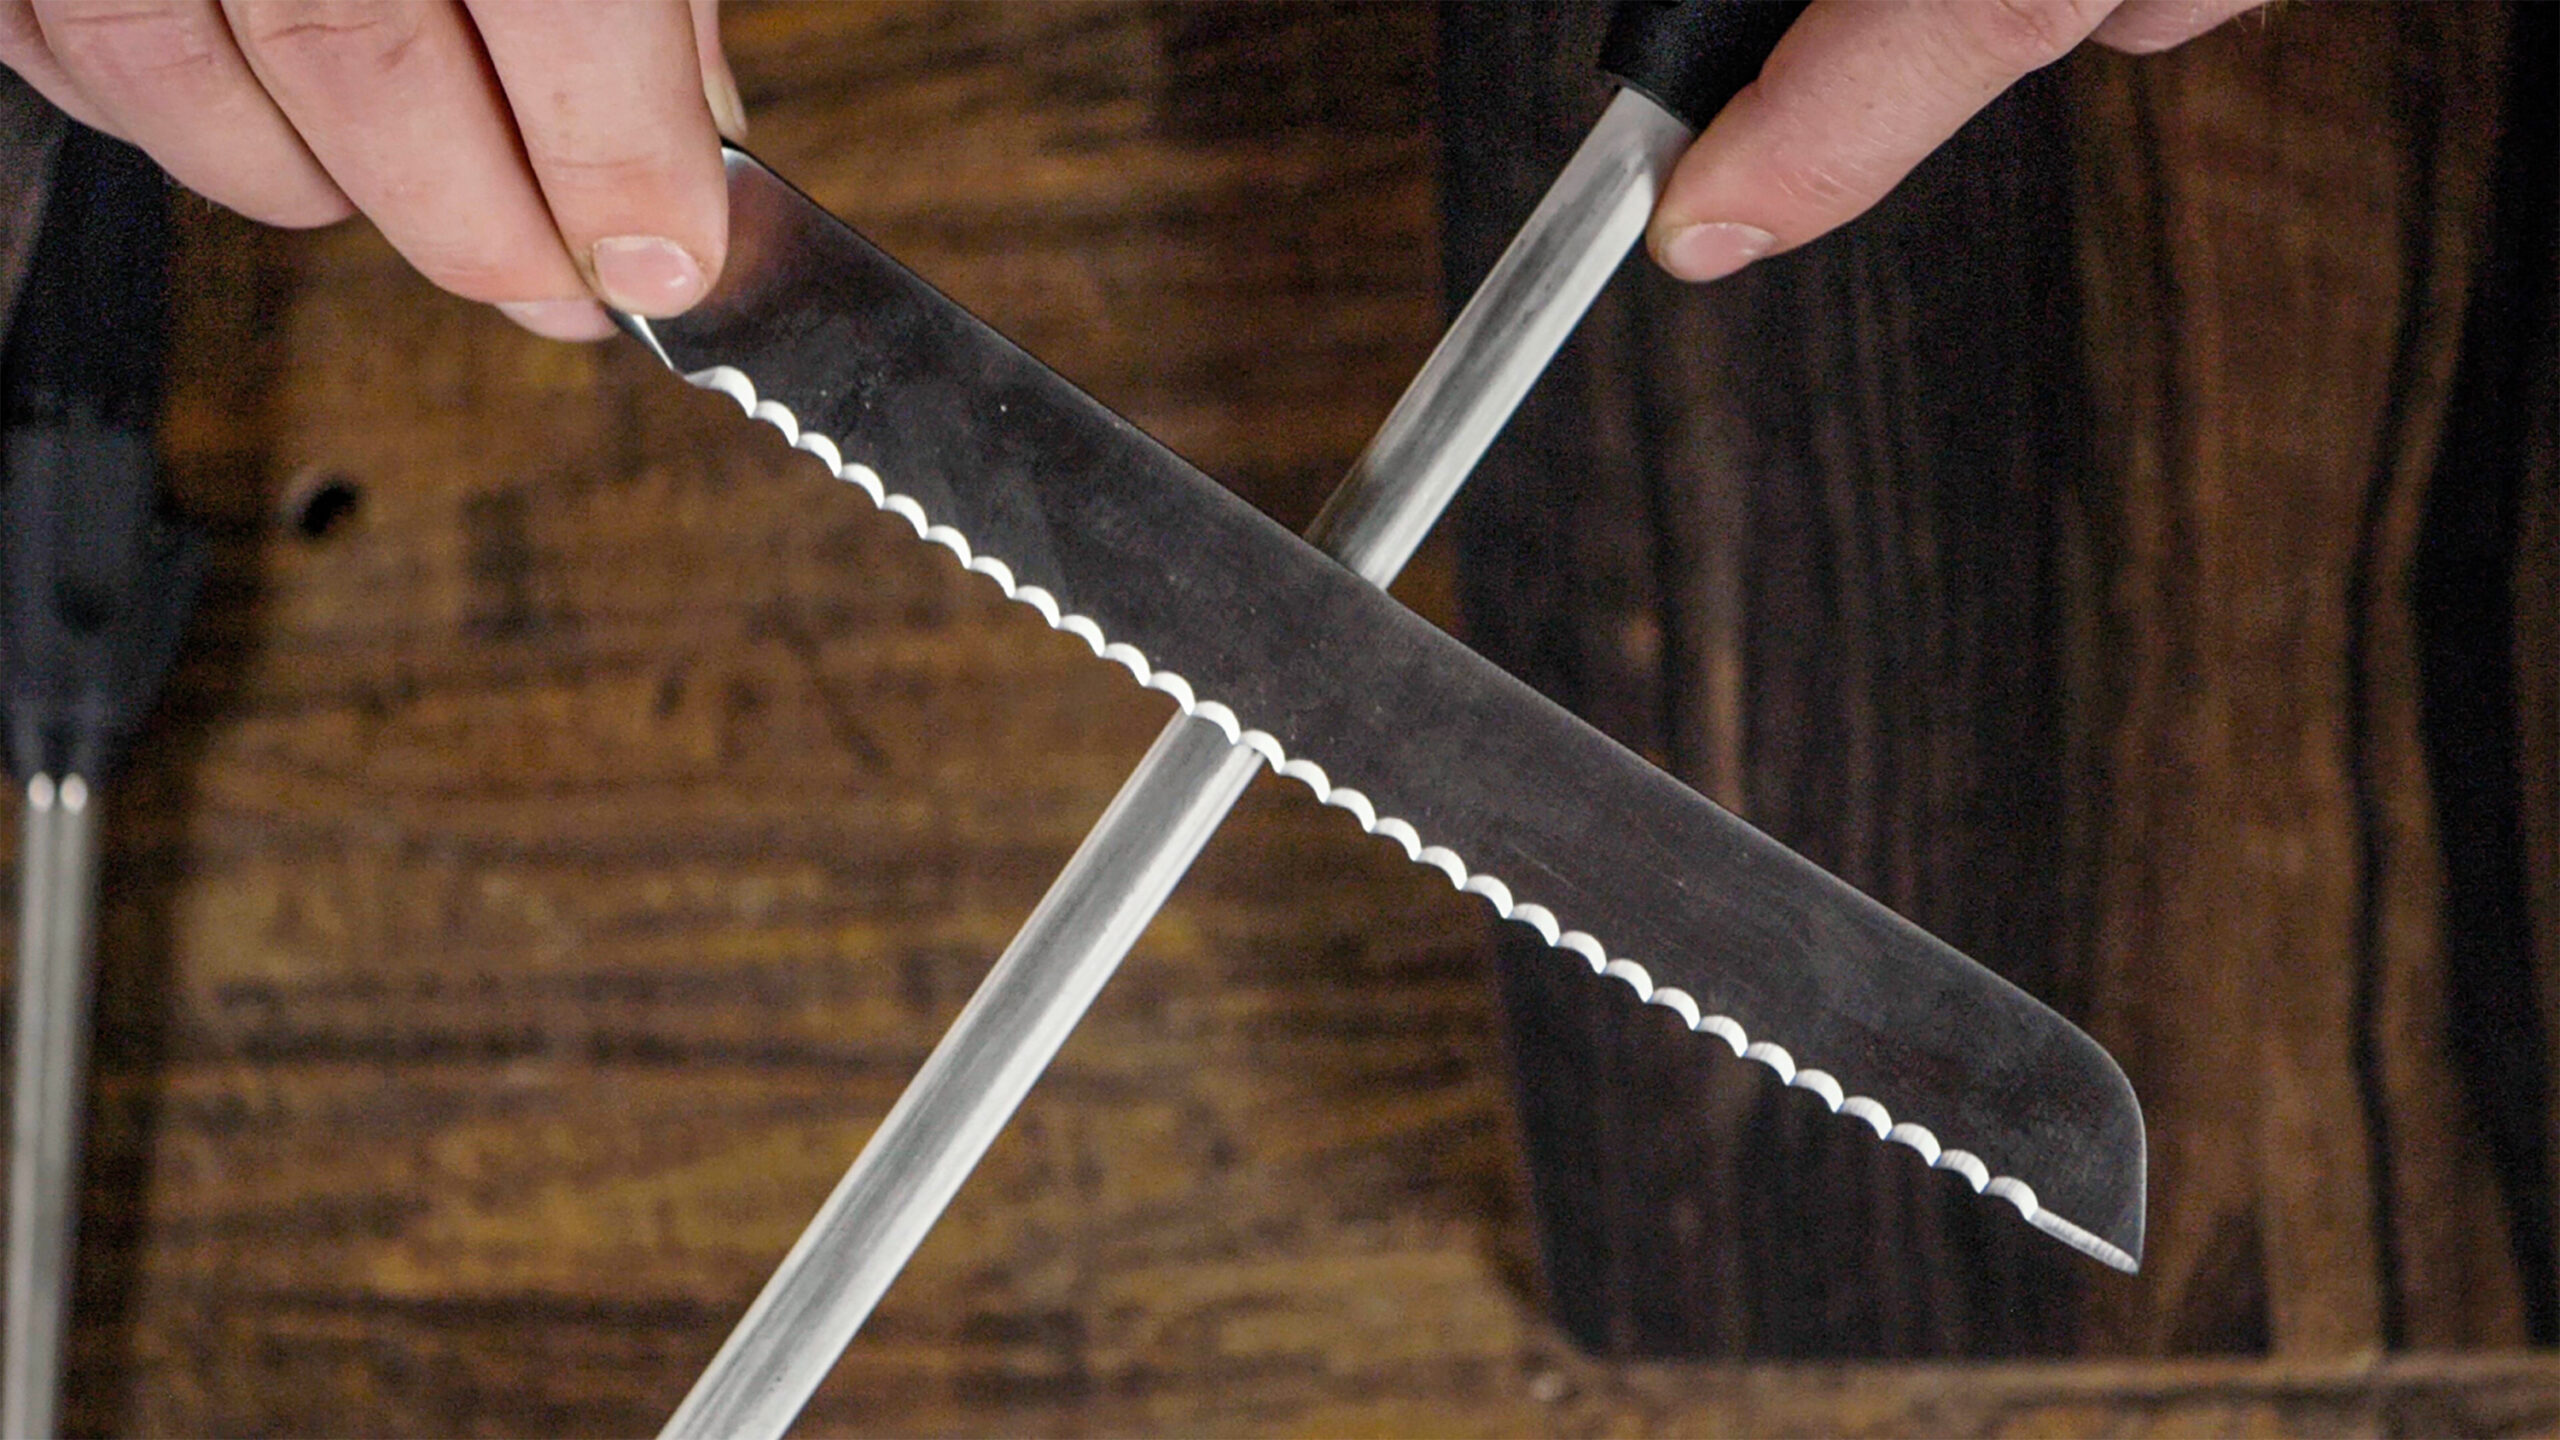 sharpen a serrated knife, serrated edge